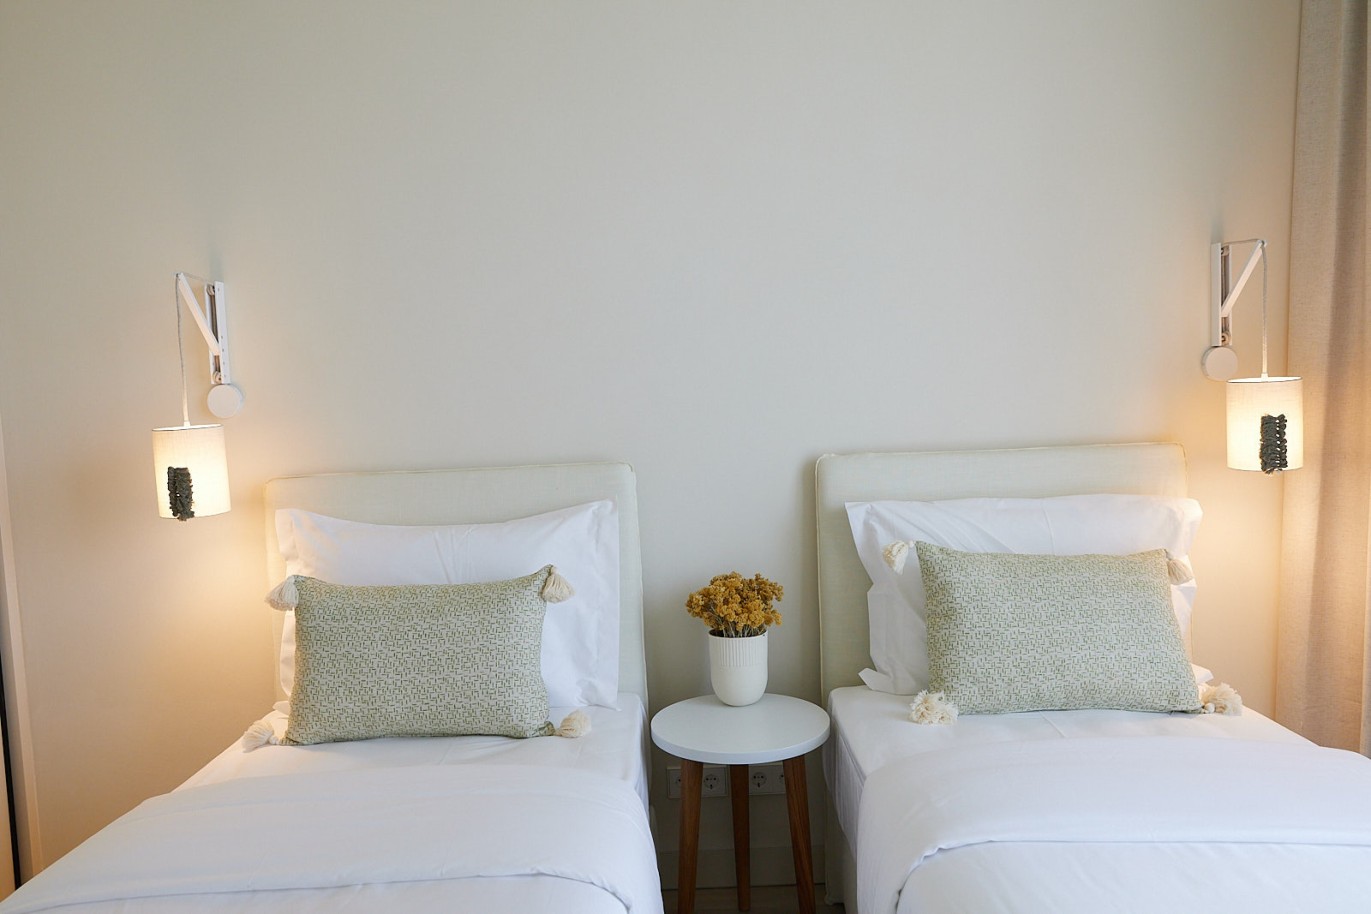 2 bedroom apartment in resort, for sale in Porches, Algarve_230595